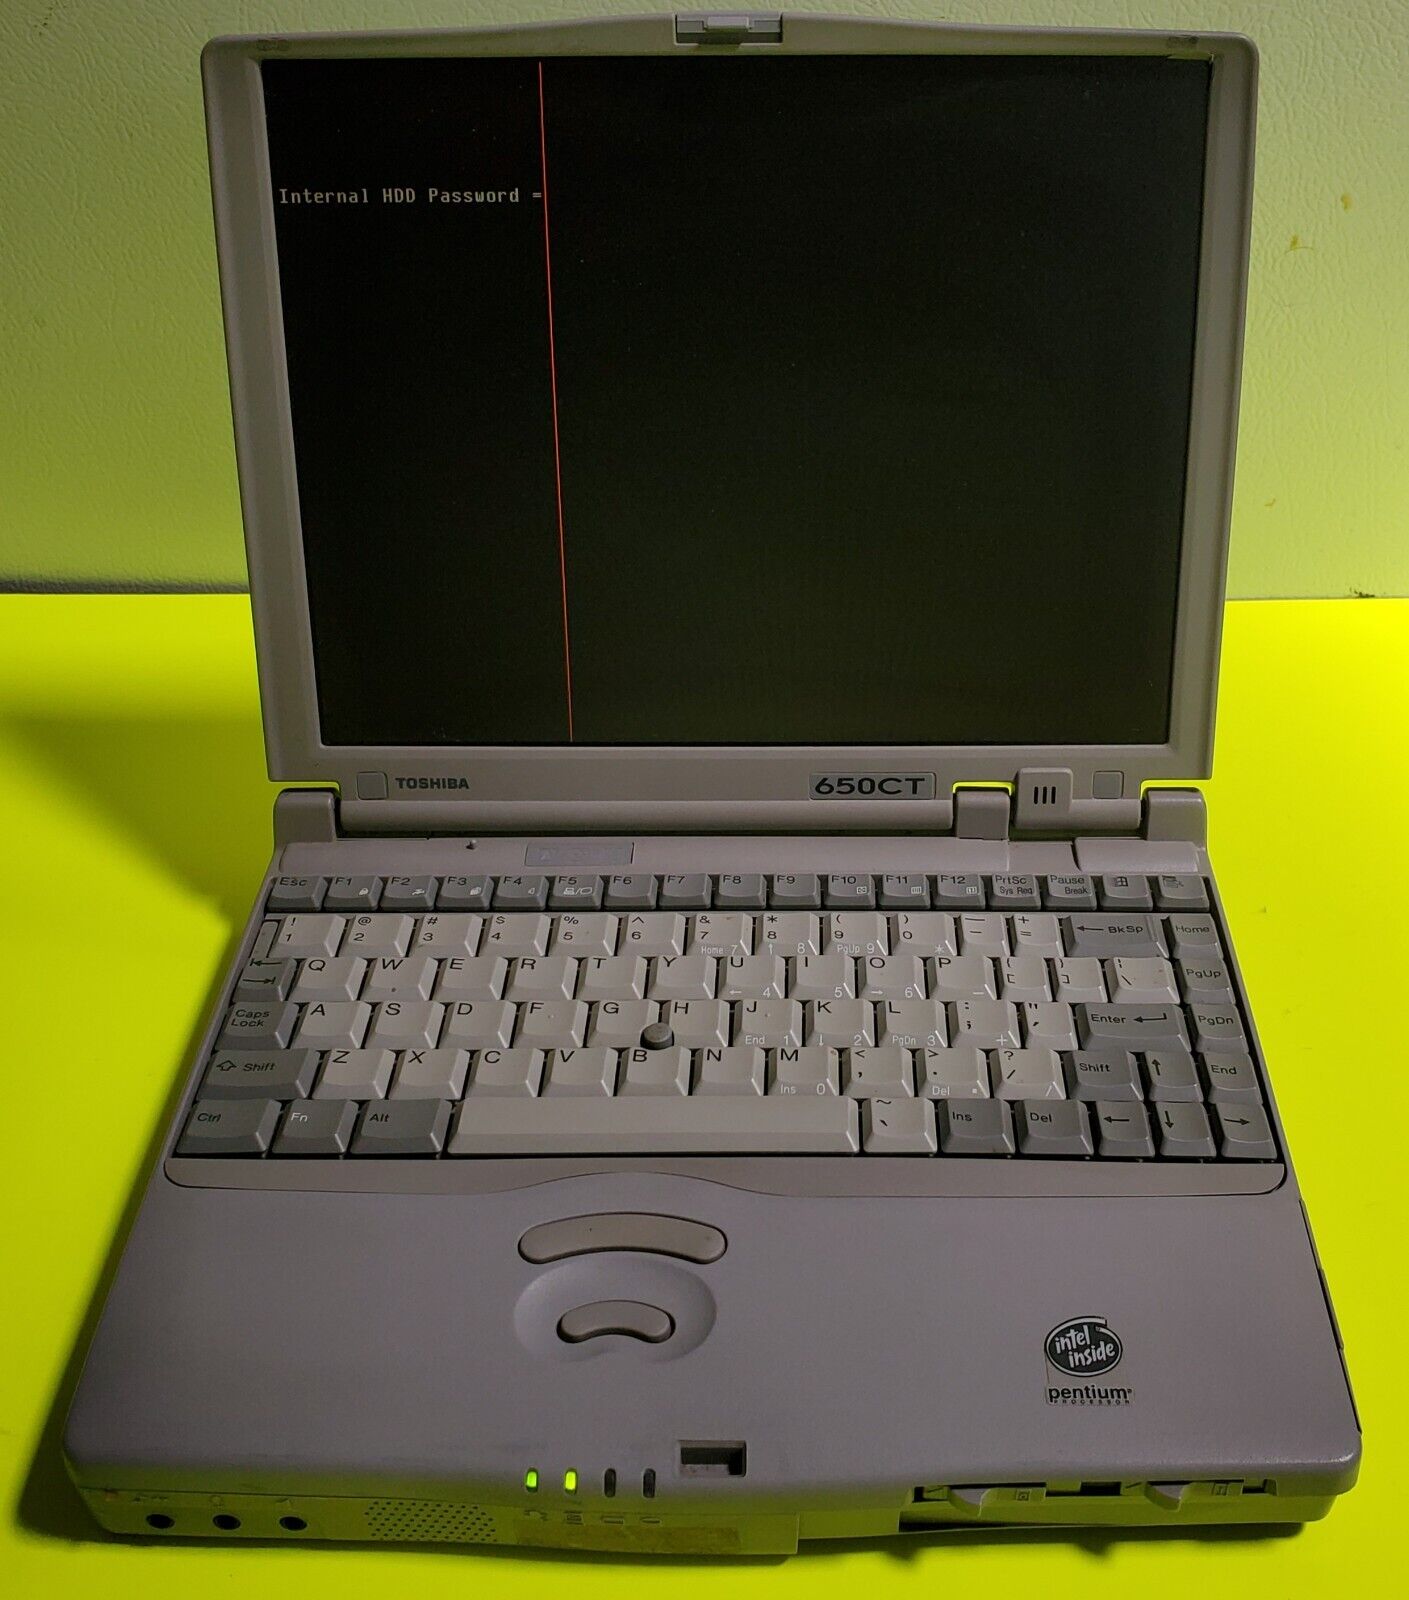 Vintage Toshiba Portege 650CT Pentium Notebook Laptop Computer Powers on as is